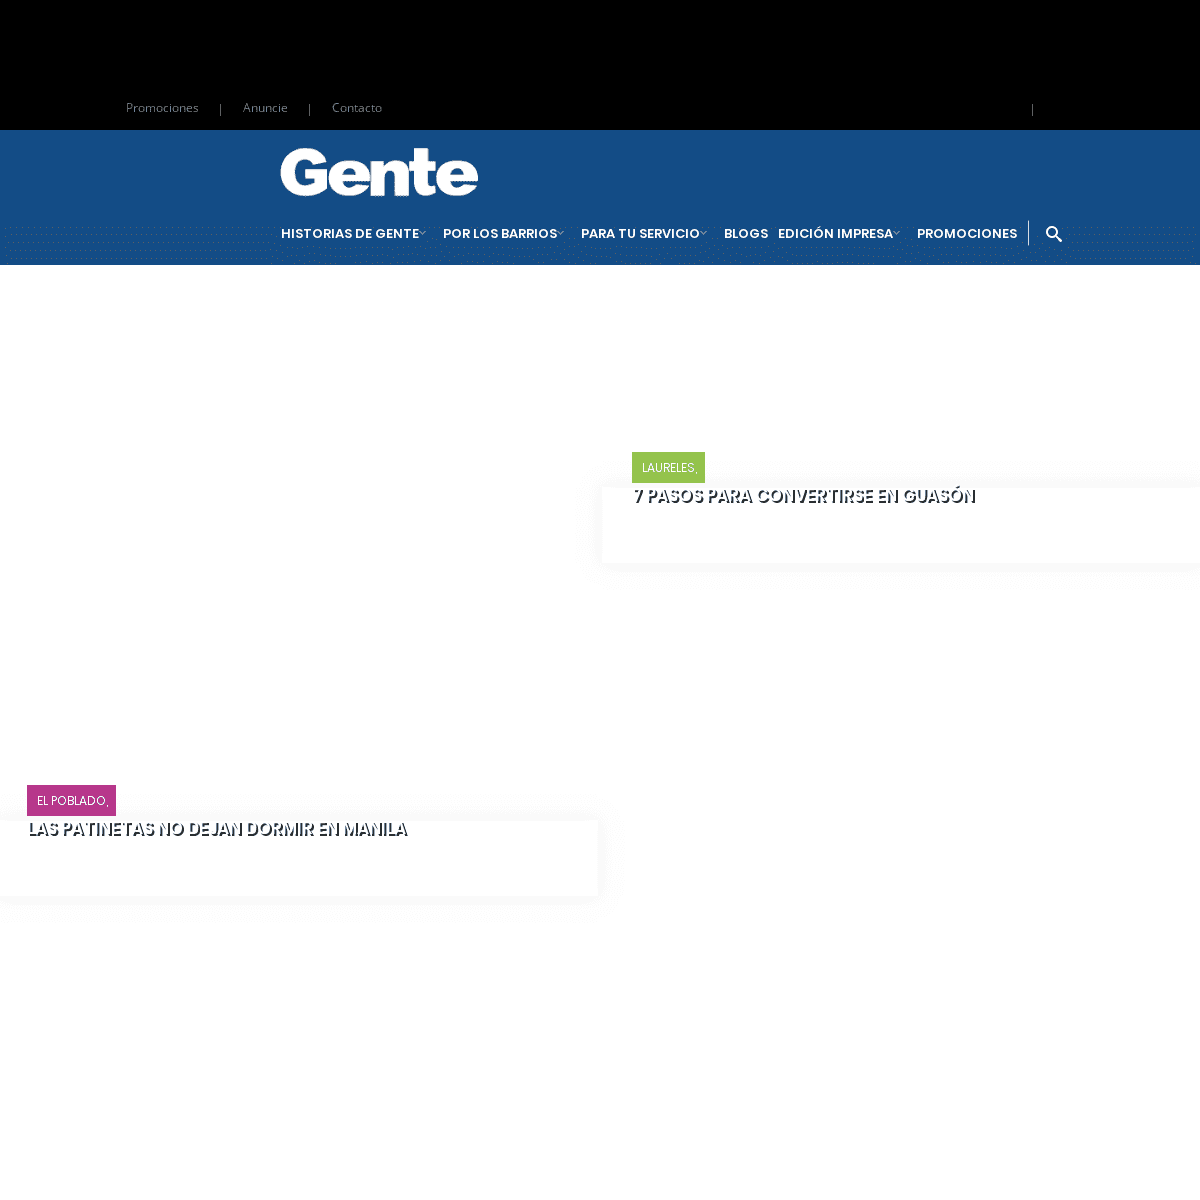 A complete backup of gente.com.co